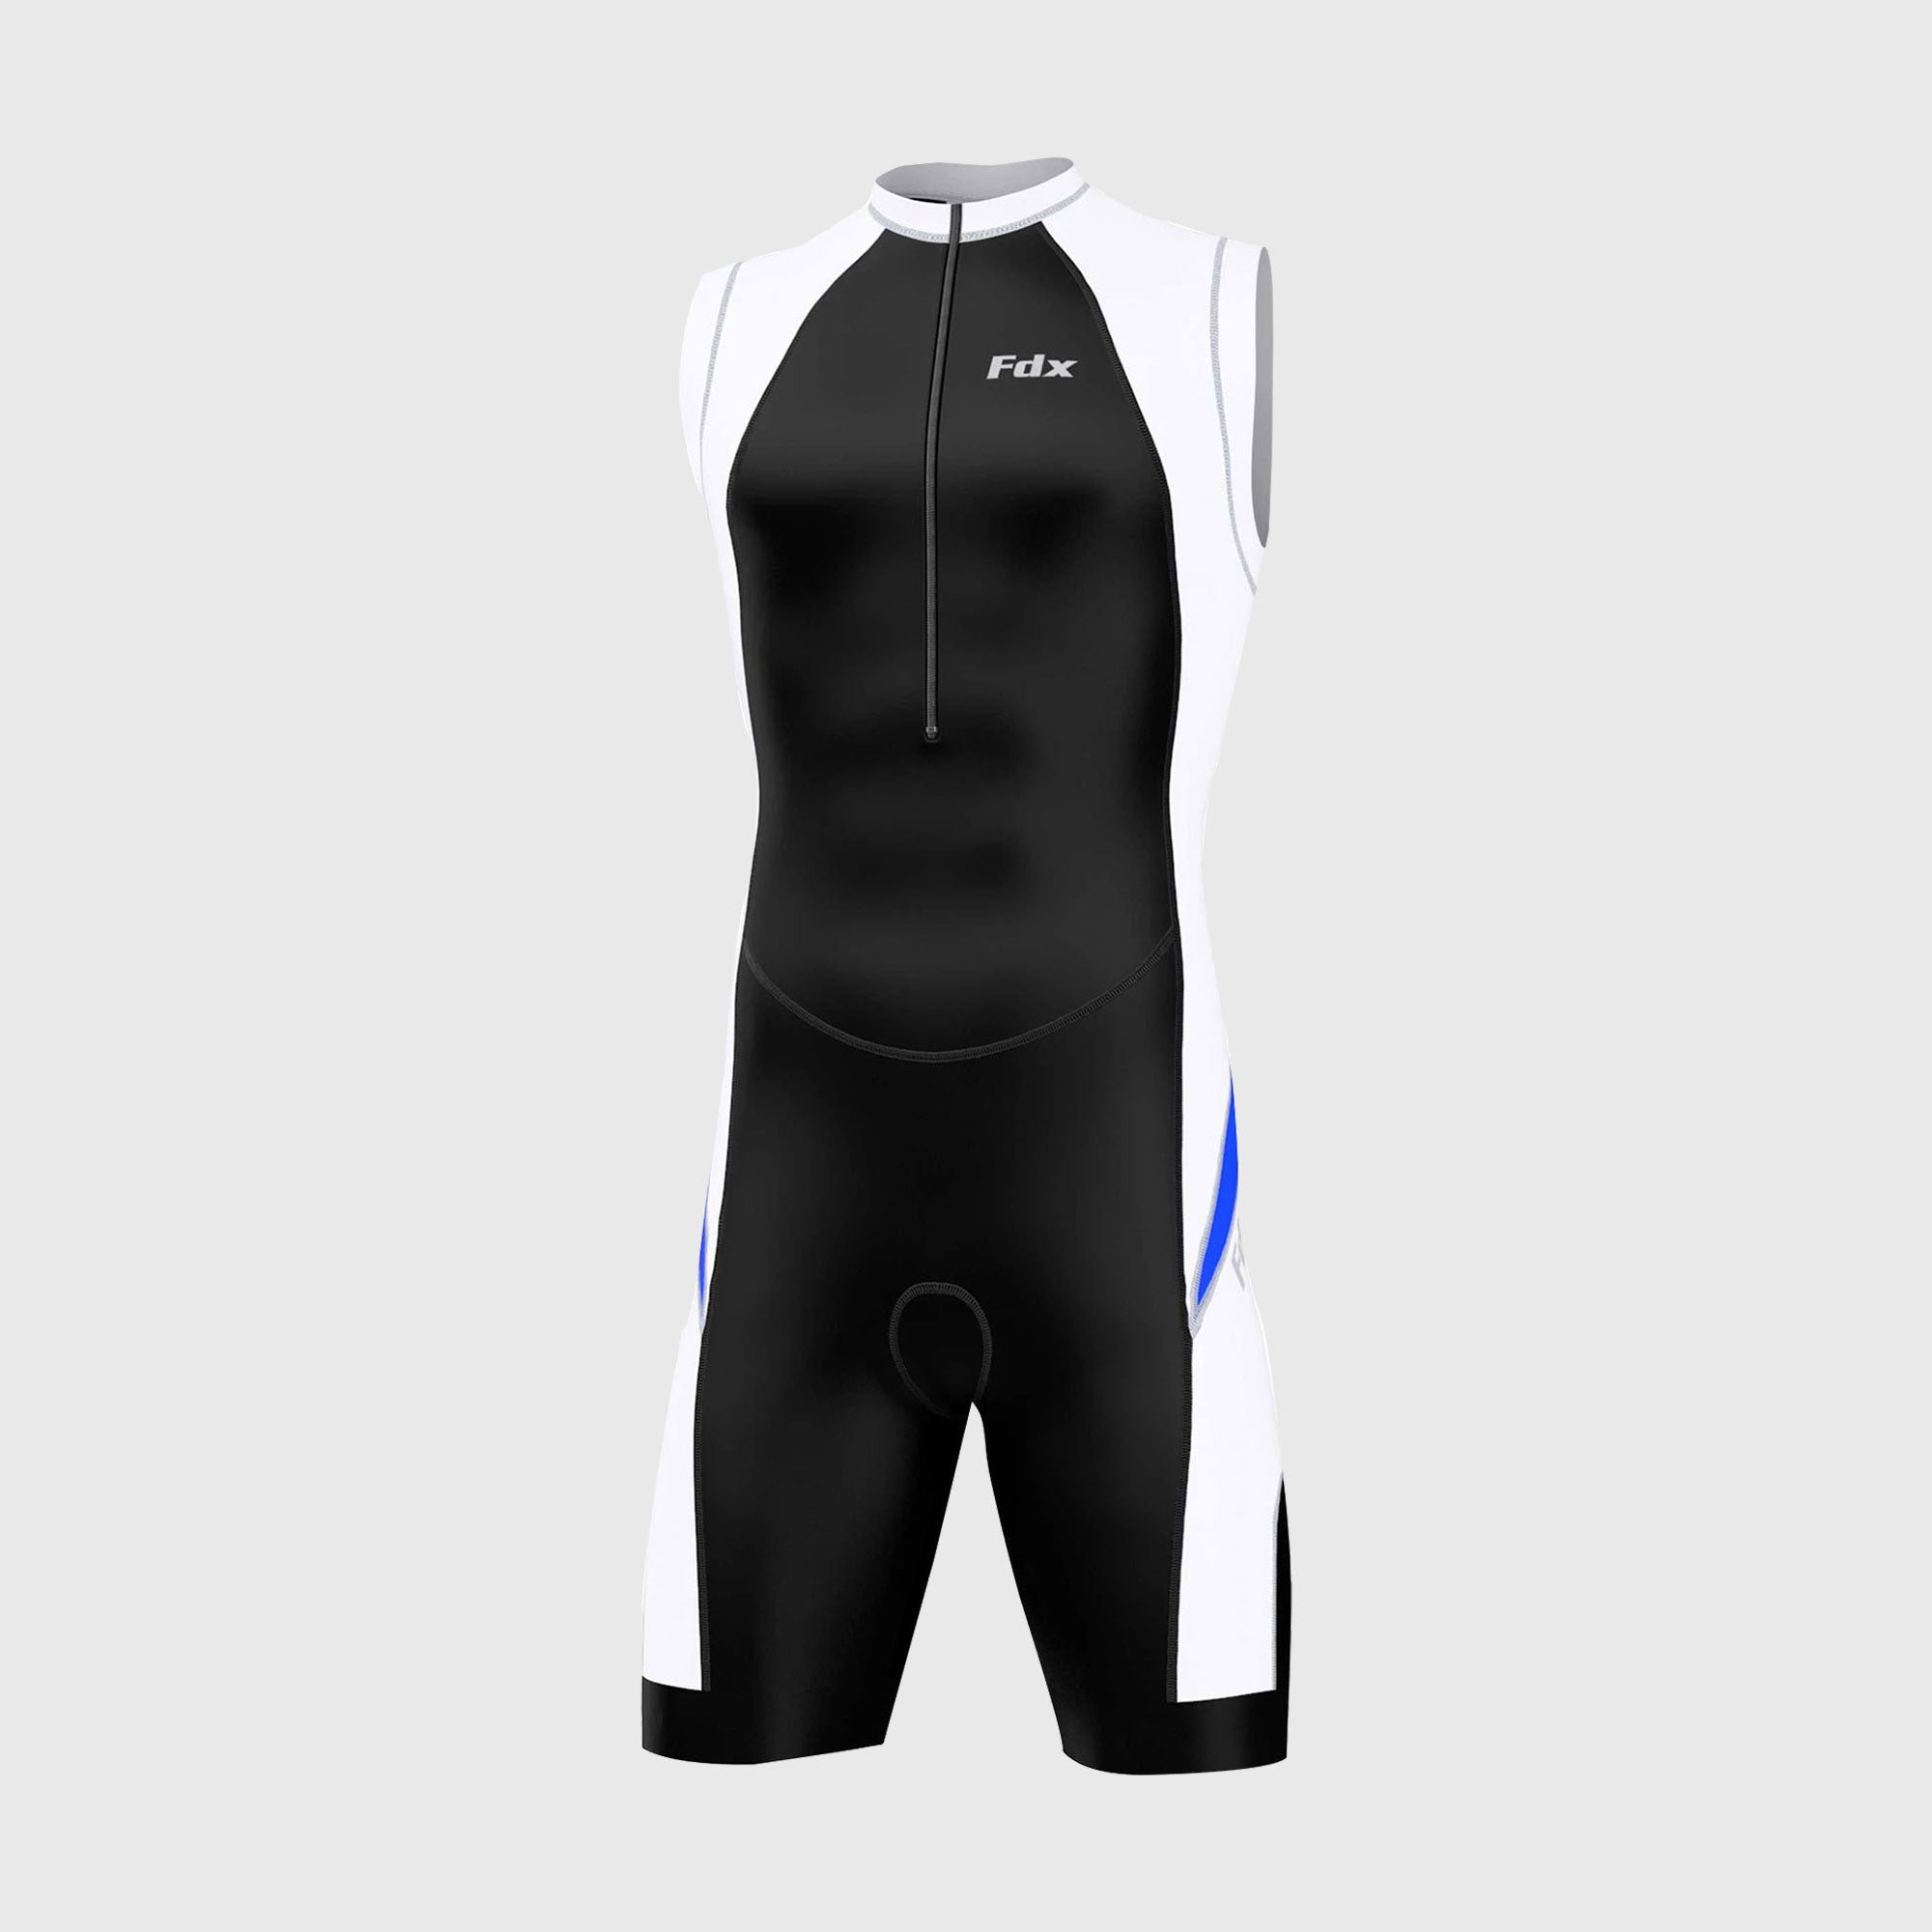 Fdx Zion Blue Men's Sleeveless Padded Triathlon Suit